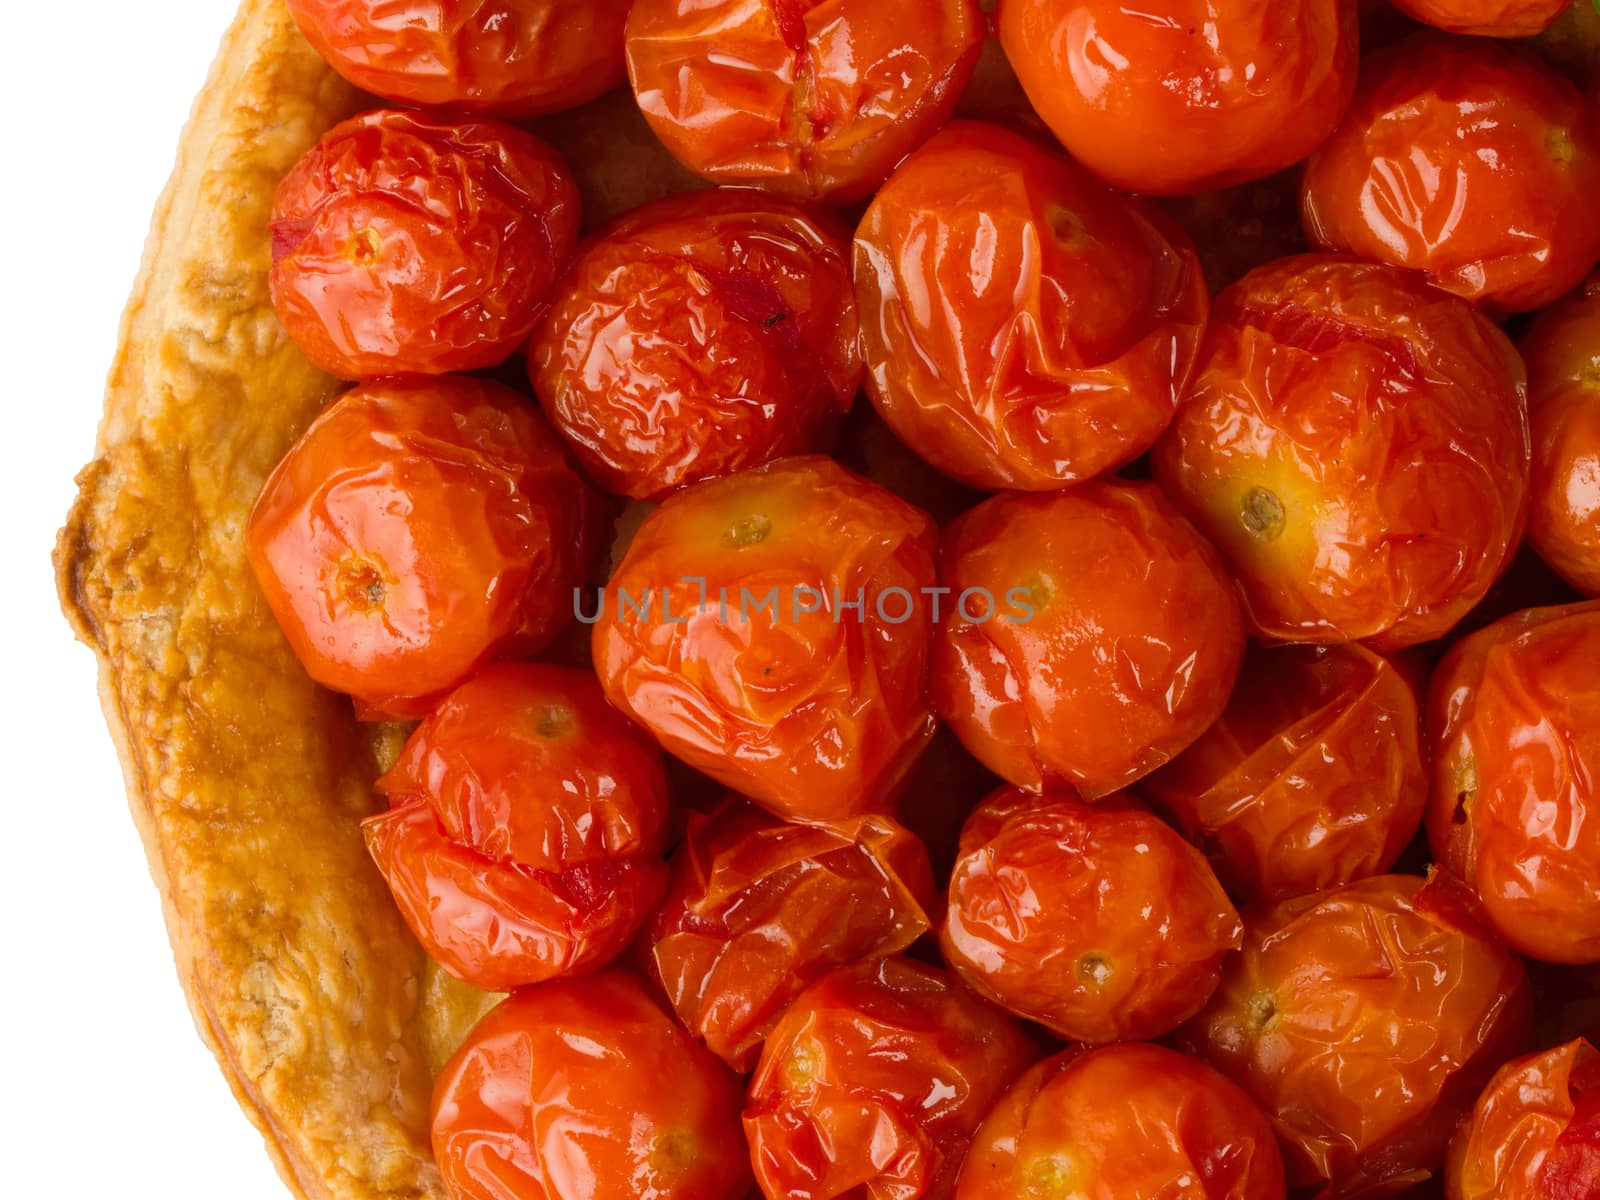 rustic cherry tomato tarte tatin by zkruger